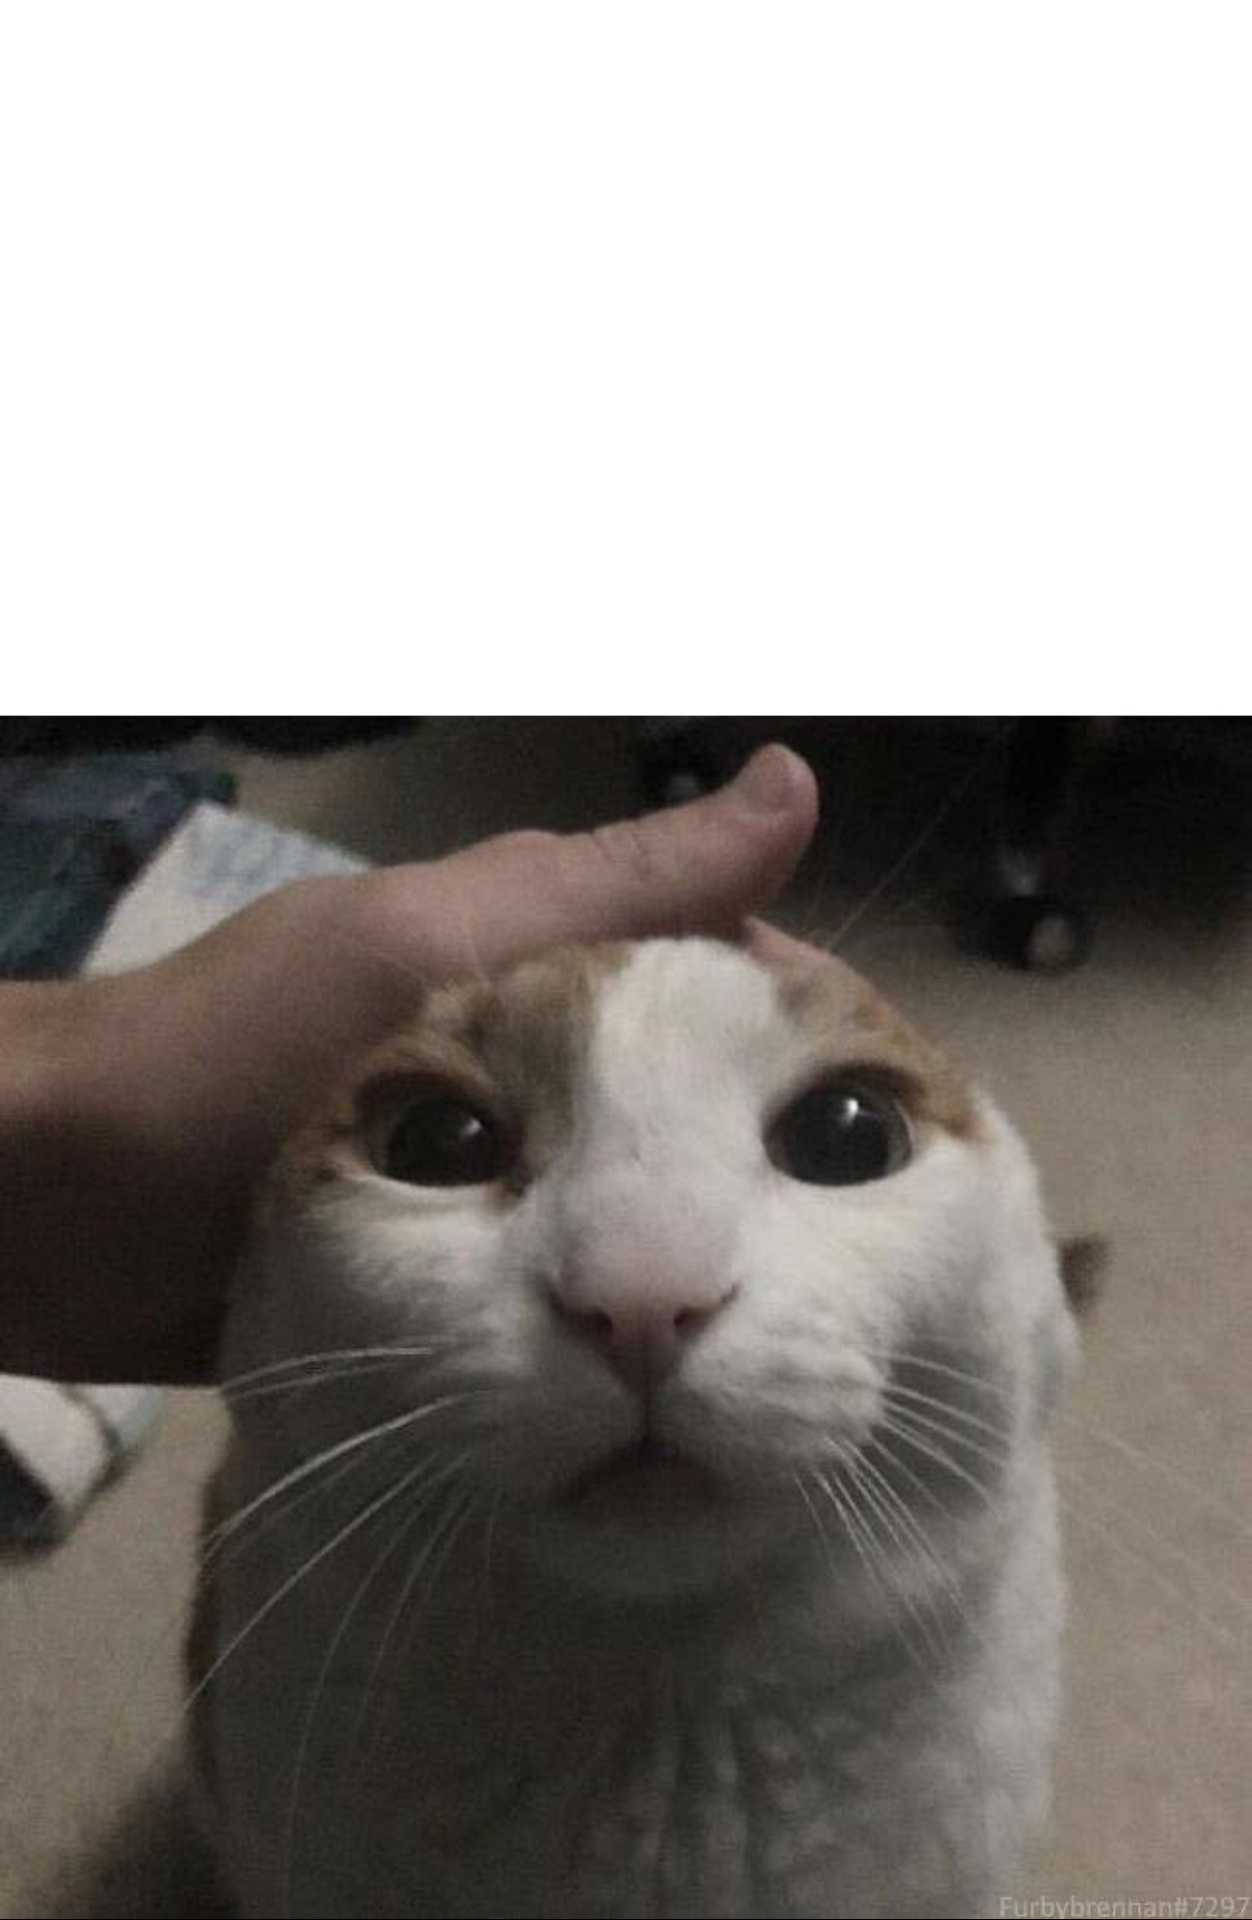 me petting my cat Blank Meme Template